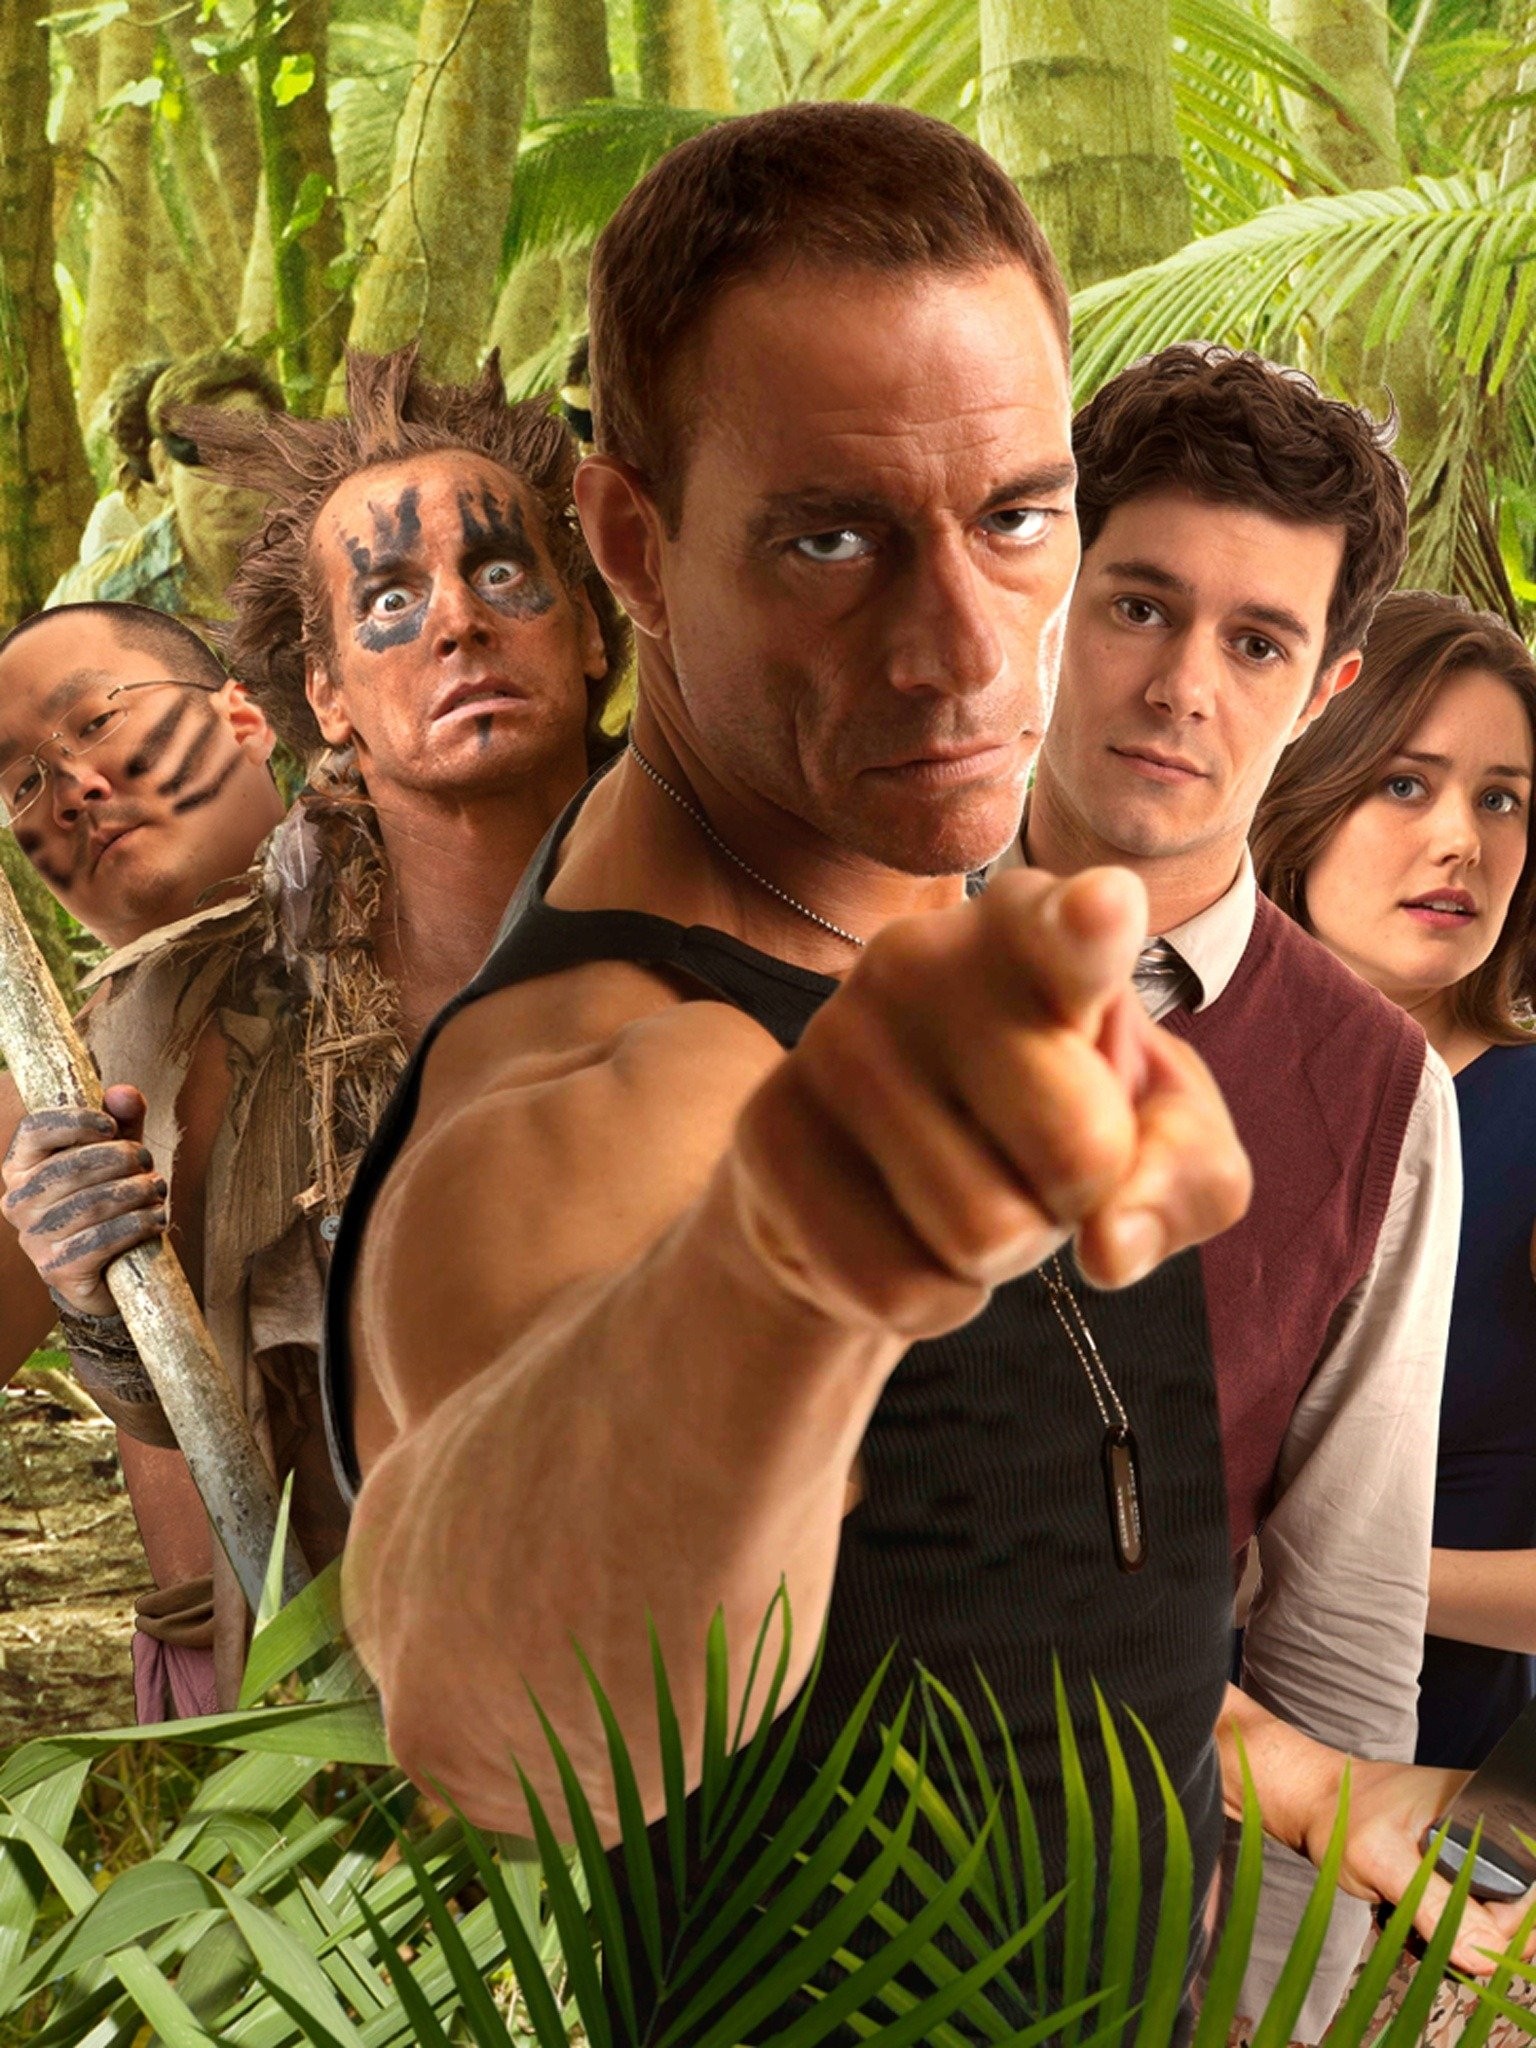 Jumanji: Welcome to the Jungle (Film) - TV Tropes